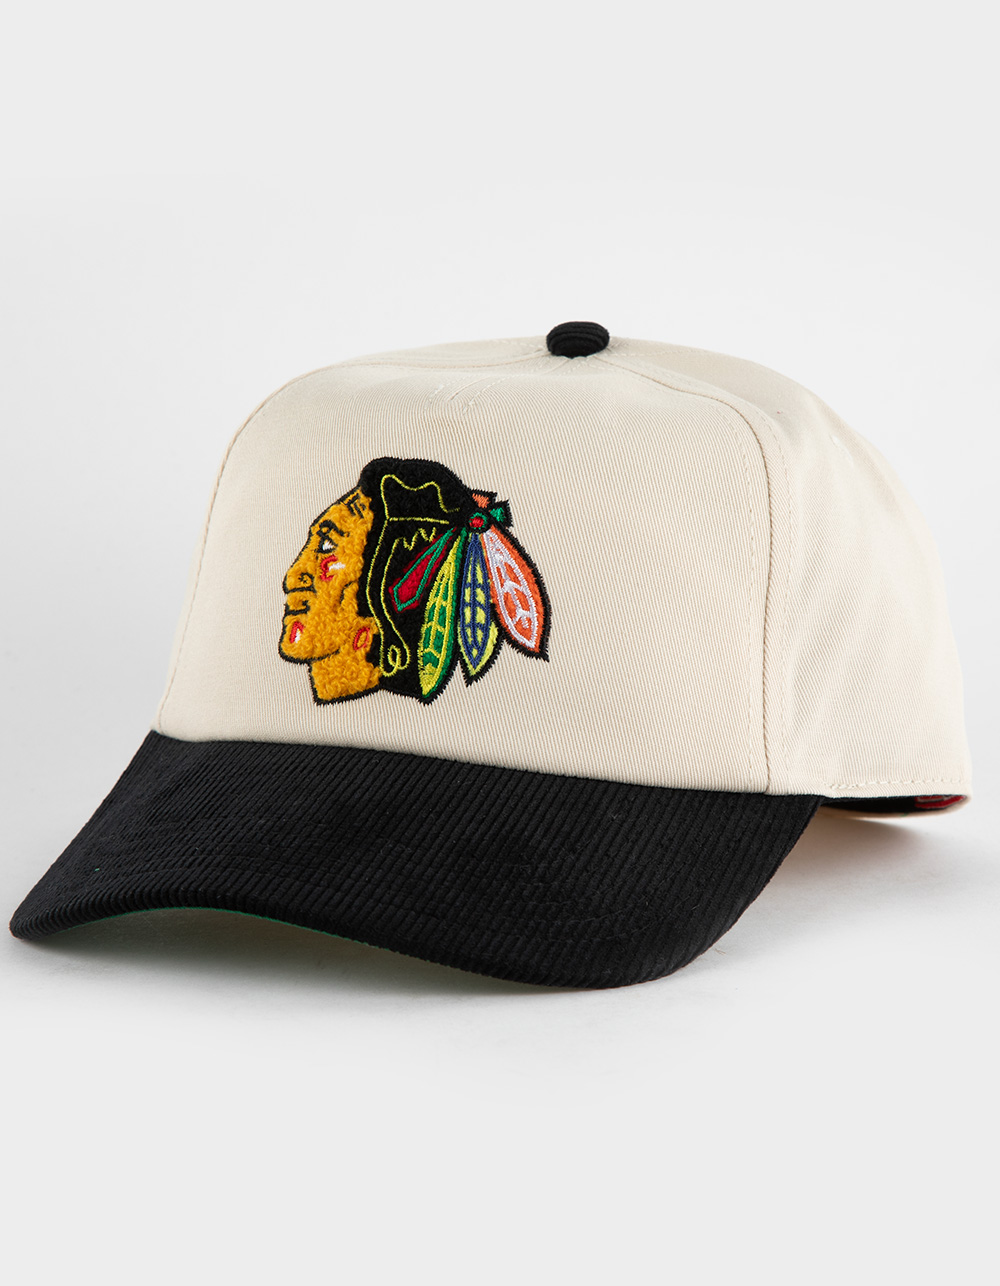 AMERICAN NEEDLE Chicago Blackhawks Burnett NHL Snapback Hat